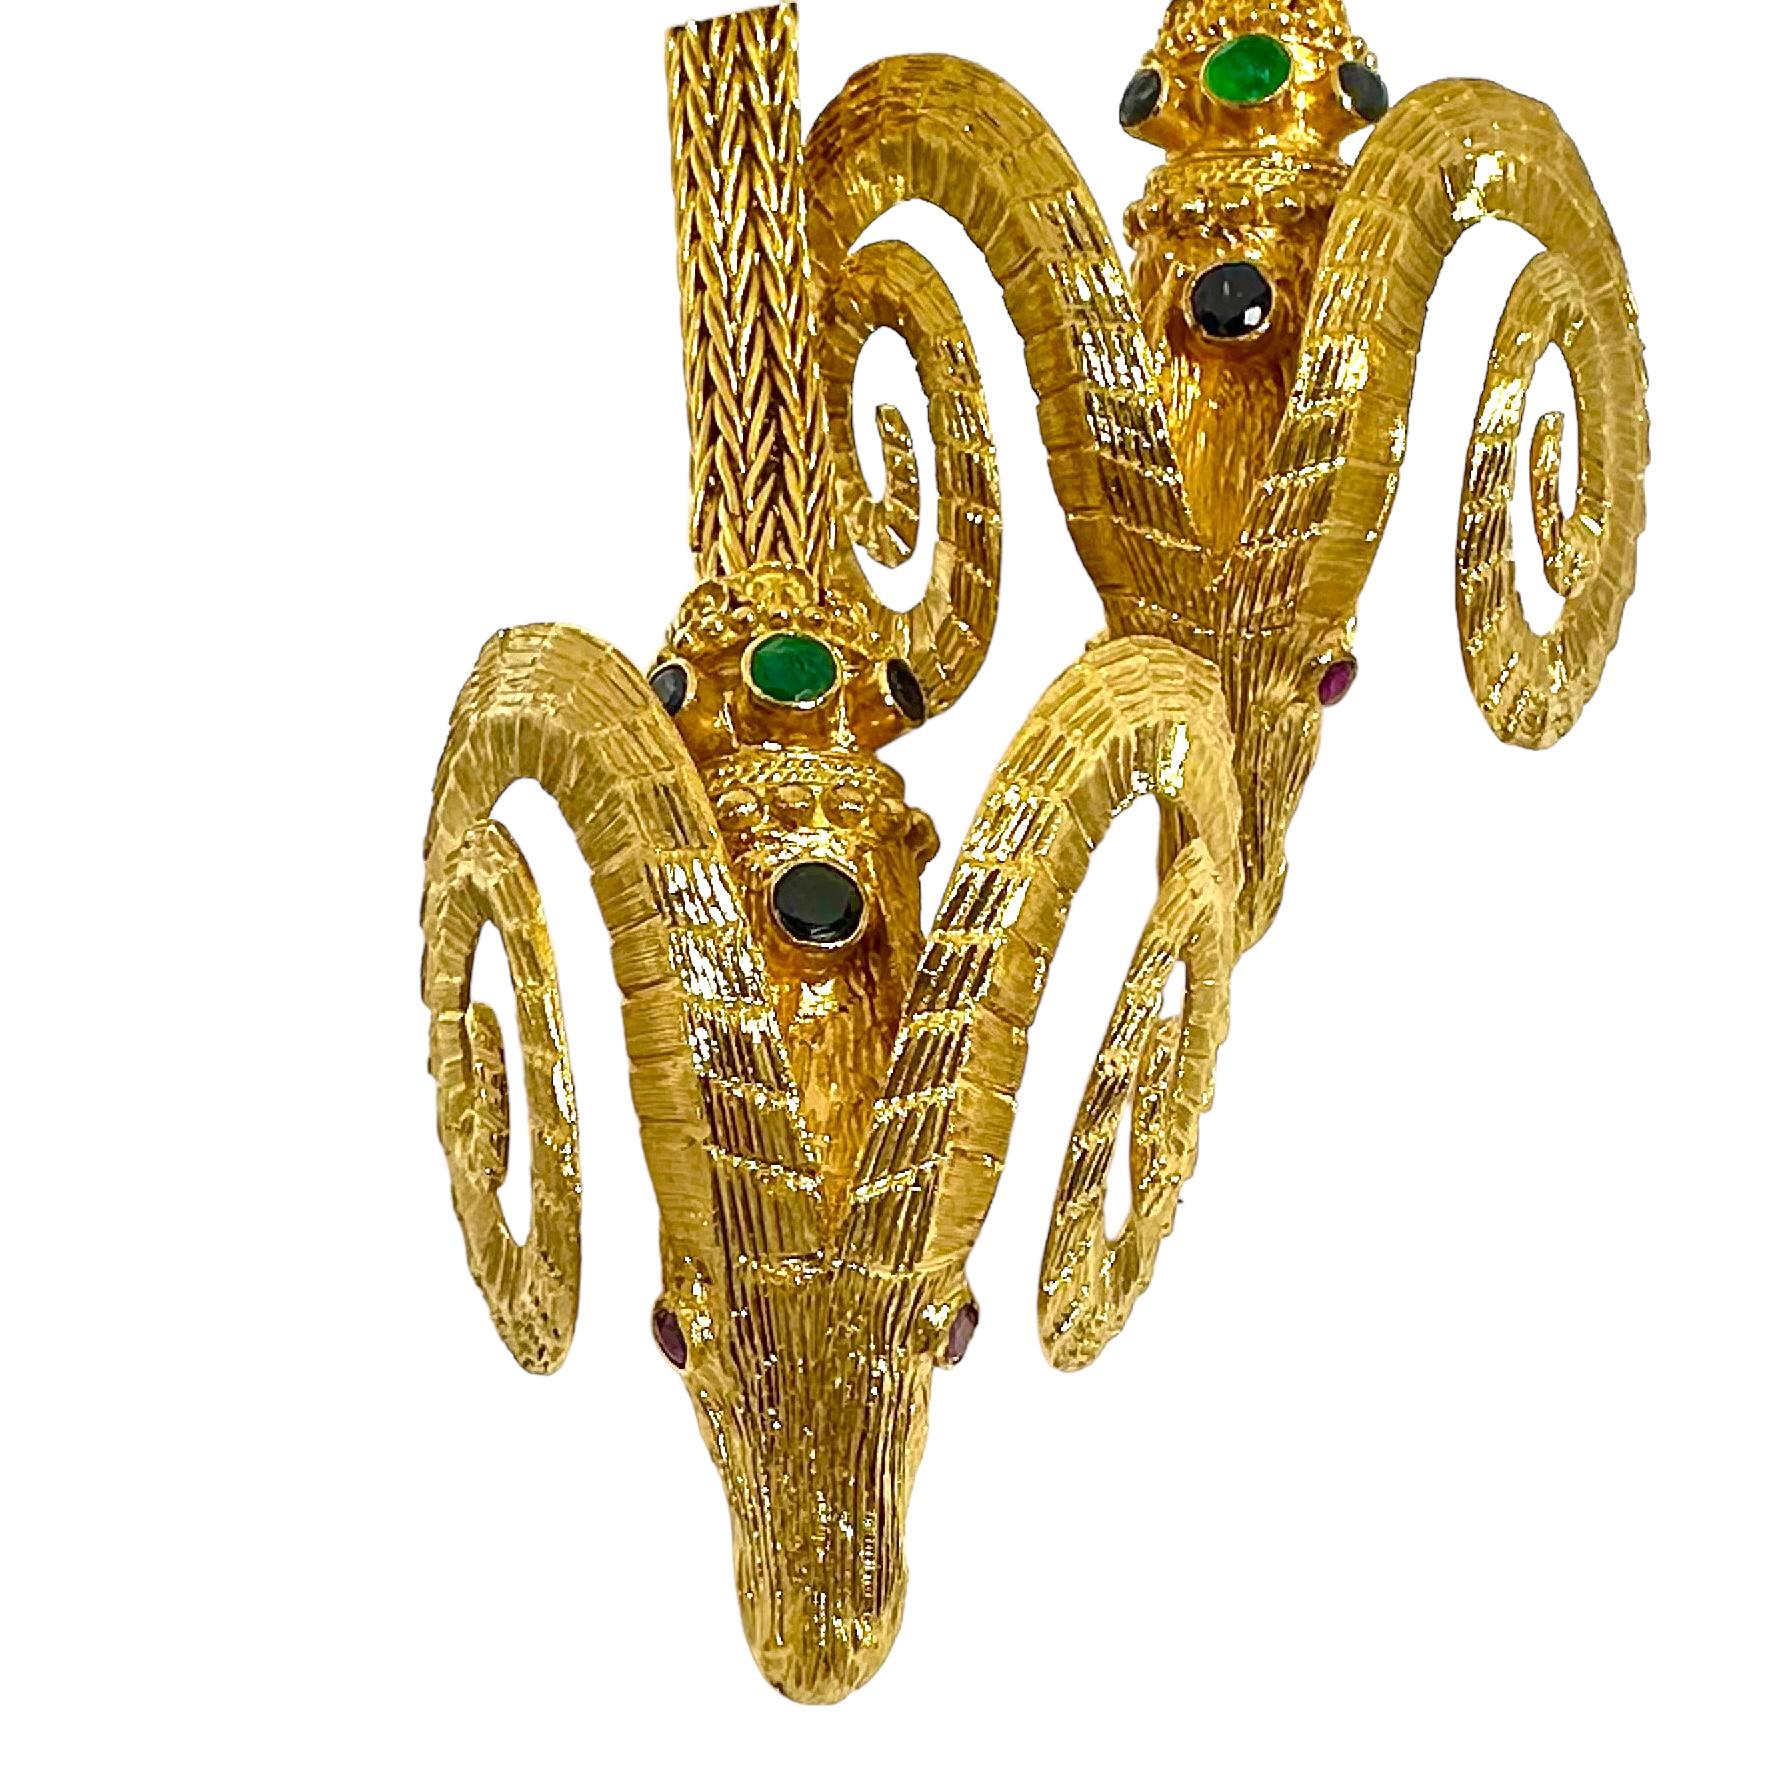 Monumentale Lalaounis 18k Gold Doppelter Widderkopf-Halskette in Monumentalgröße 38 Zoll lang im Angebot 3